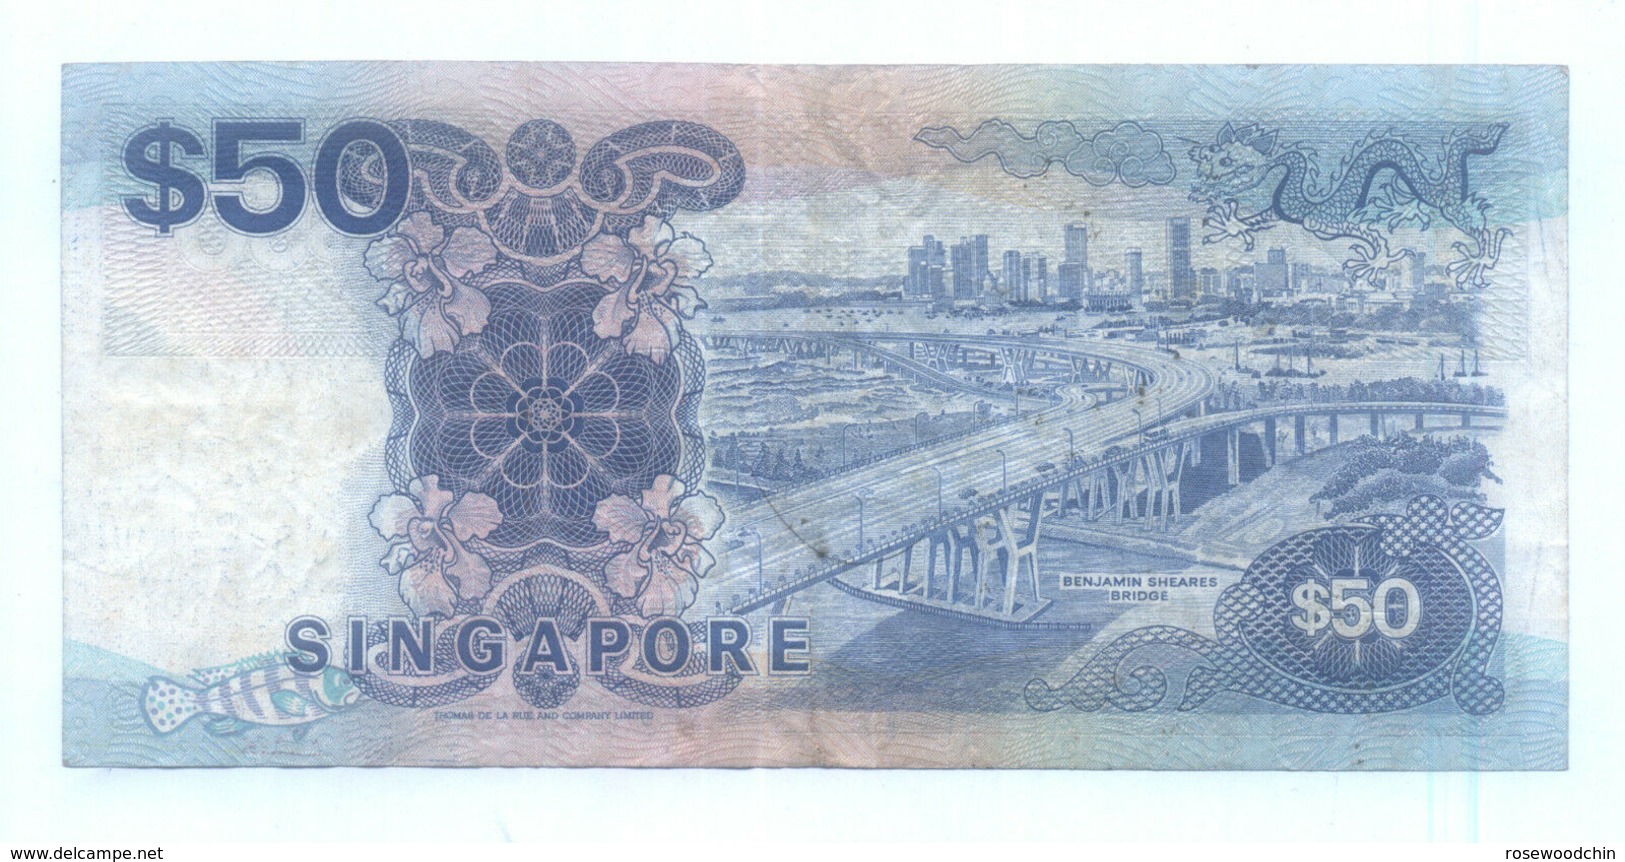 RARE !! SINGAPORE $50 Ship Series Coaster Vessel  CURRENCY MONEY BANKNOTE 'A' PREFIX (#2) - Singapur